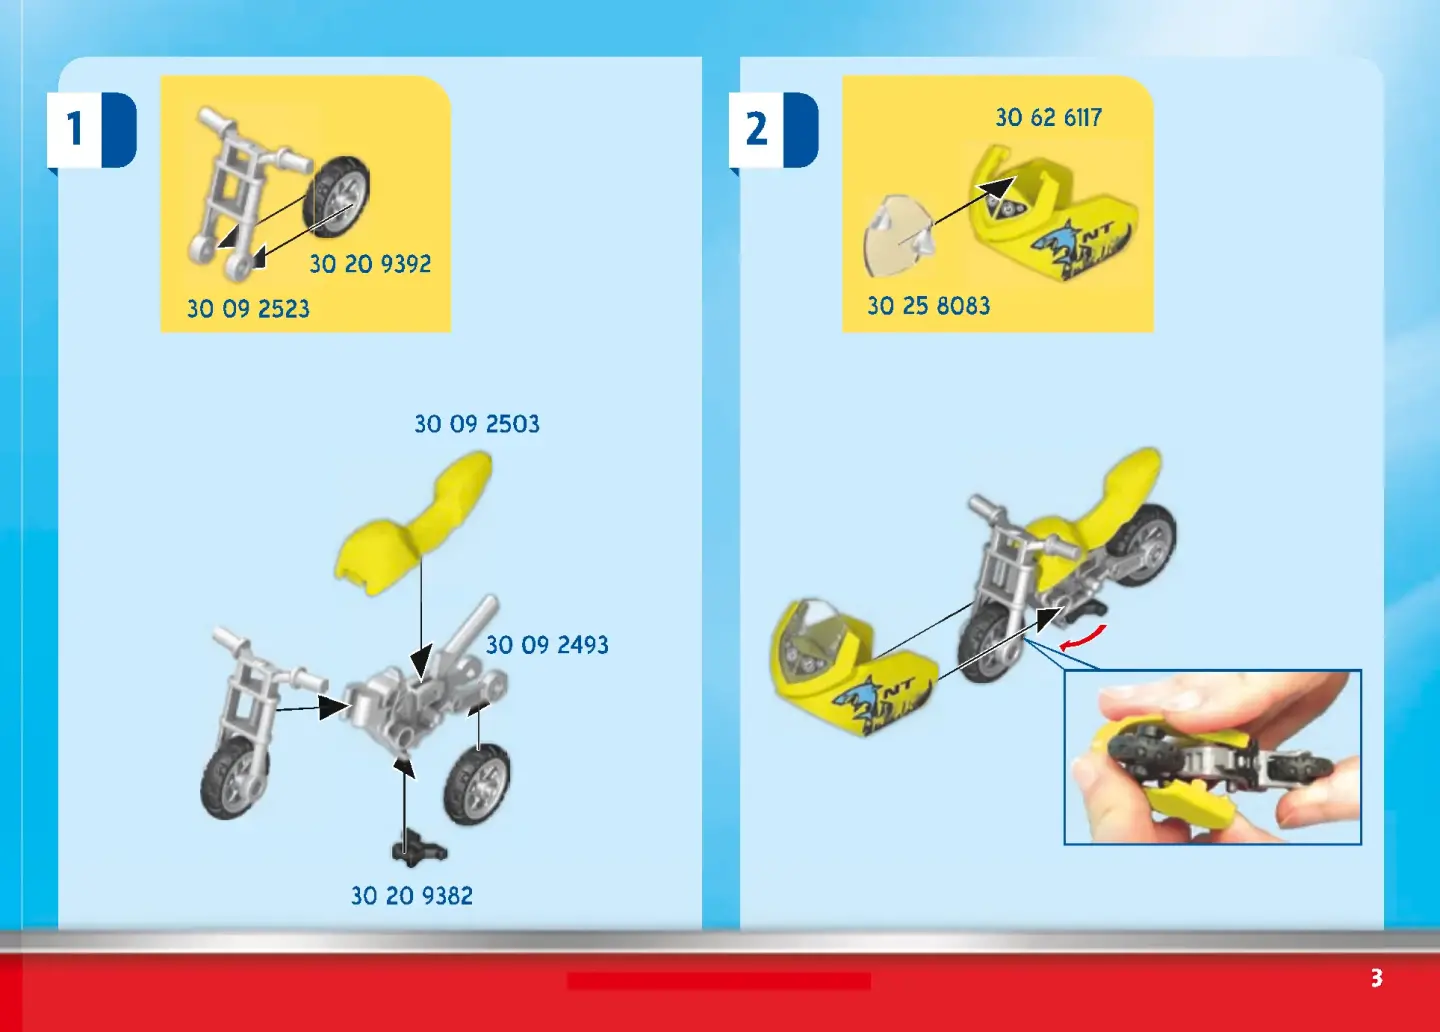 Playmobil 70380 Kids with Mini-Moto